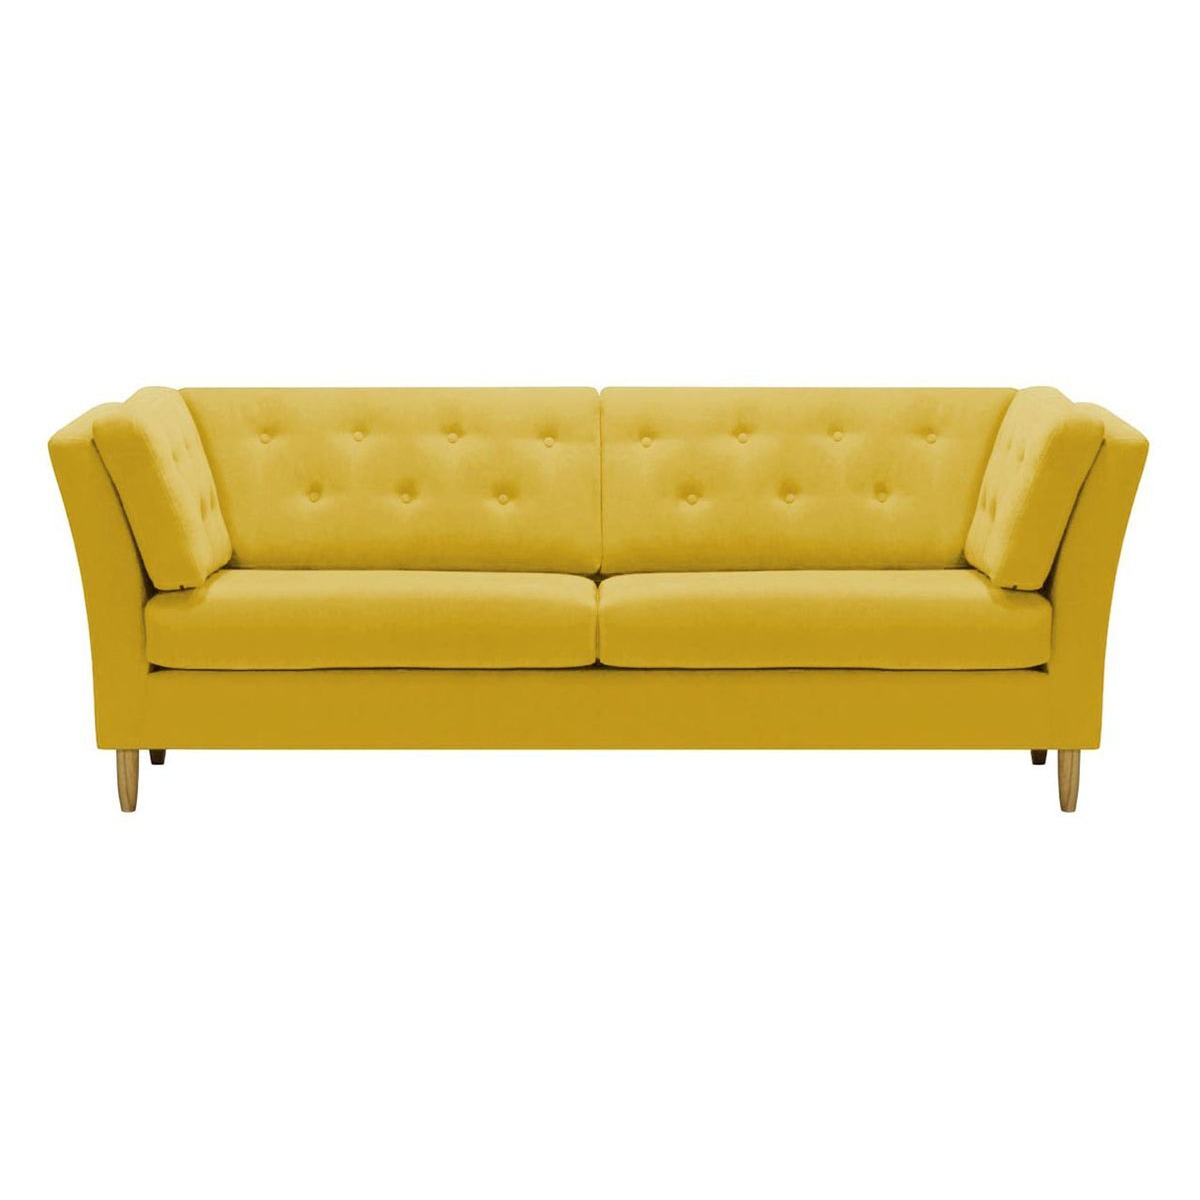 Viko 3 Seater Sofa, yellow - image 1